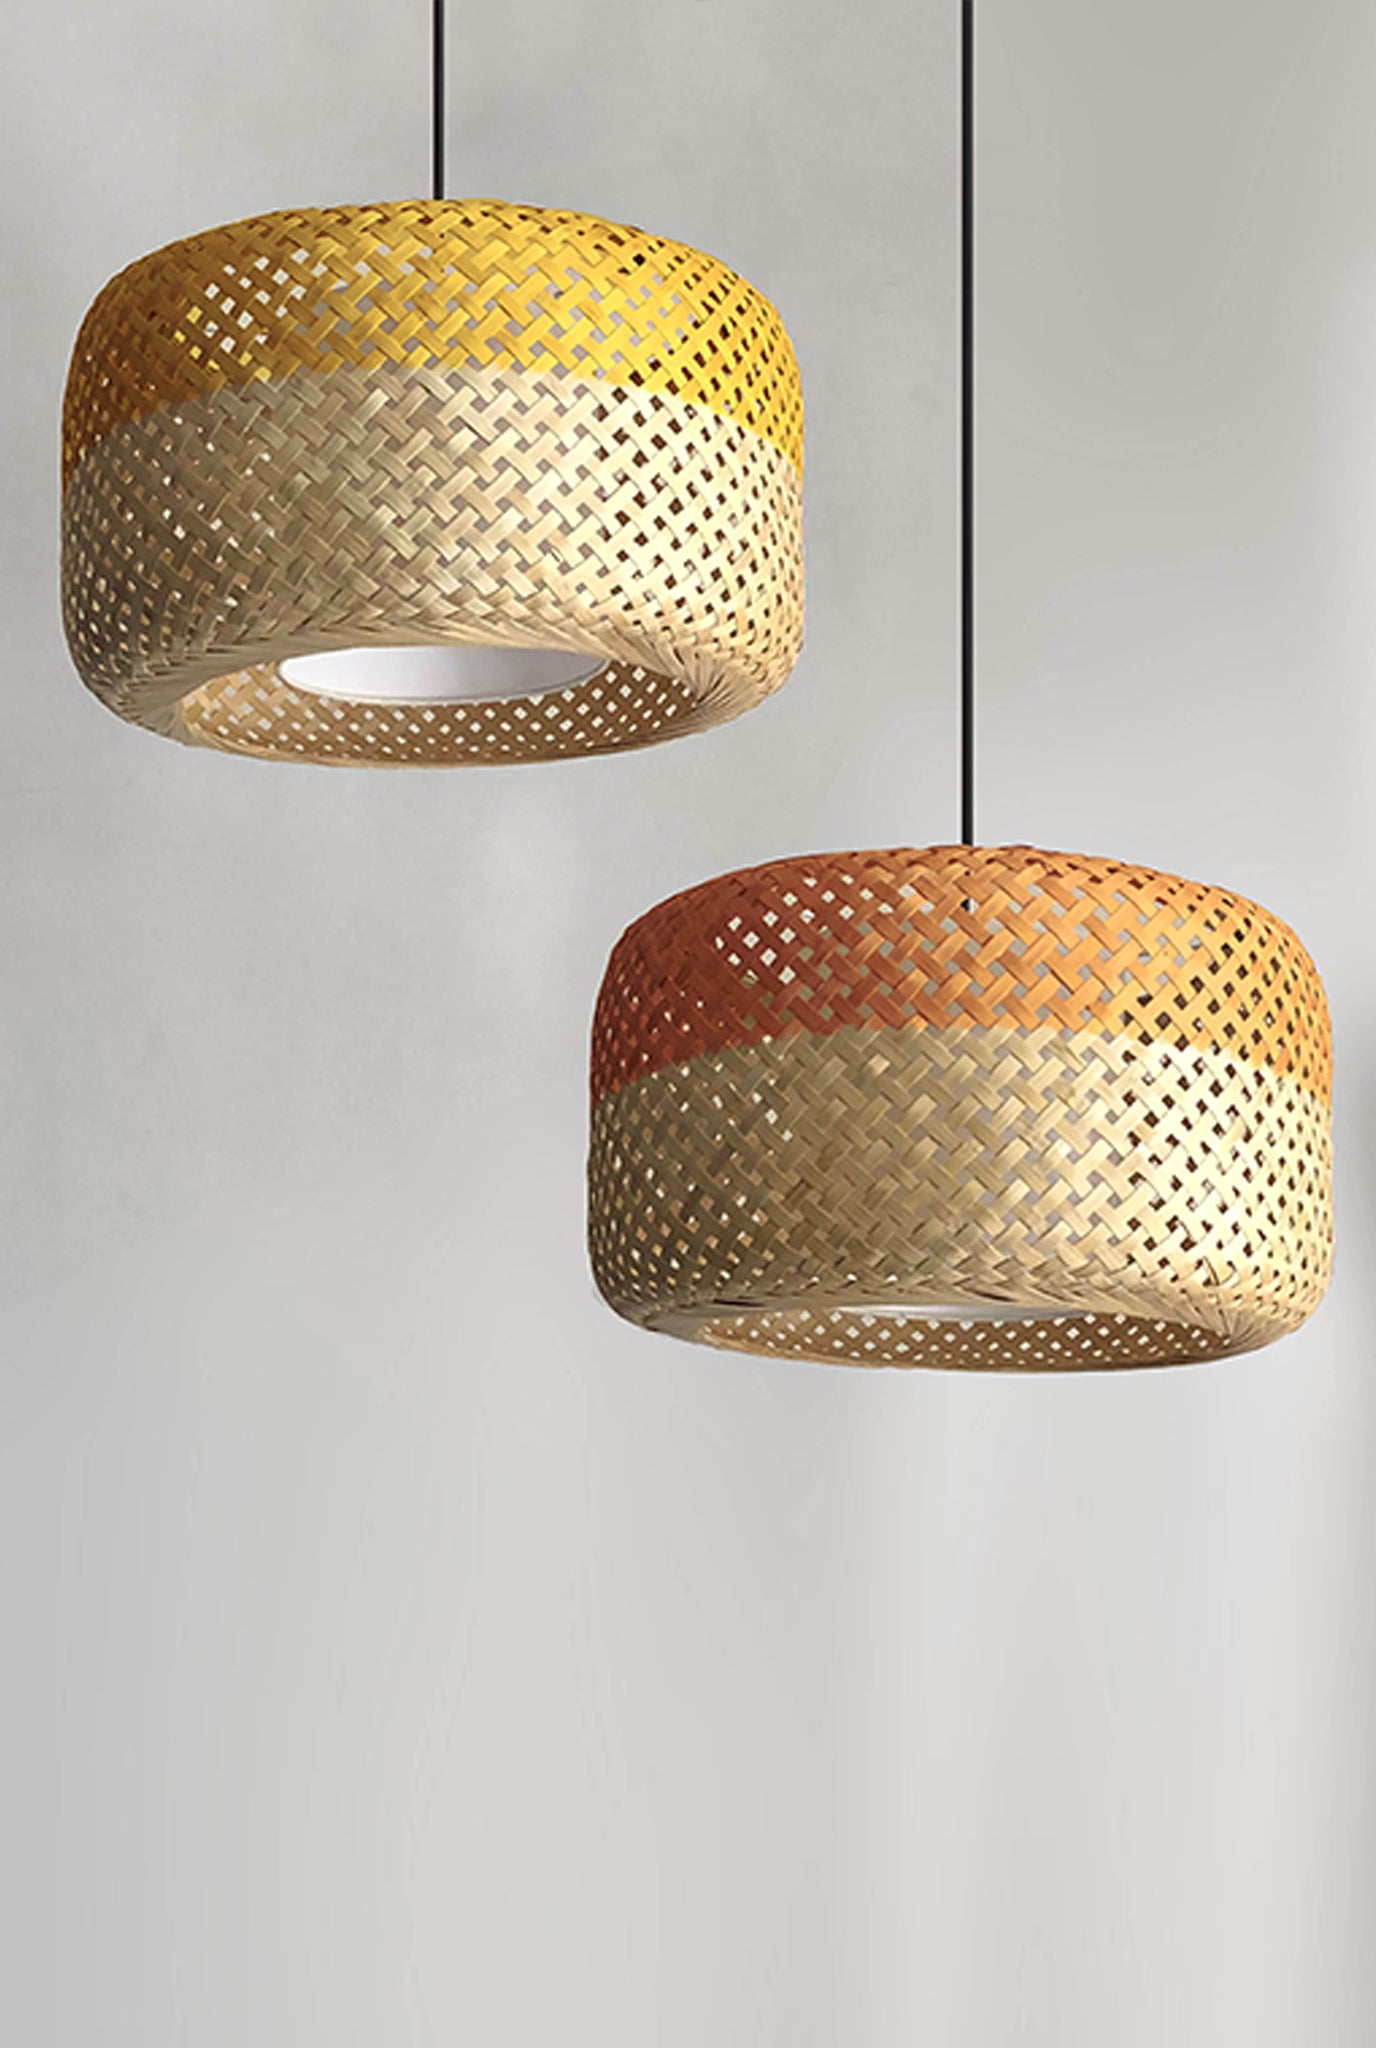 lamp-handcrafted-pendantlight-lights-bamboo